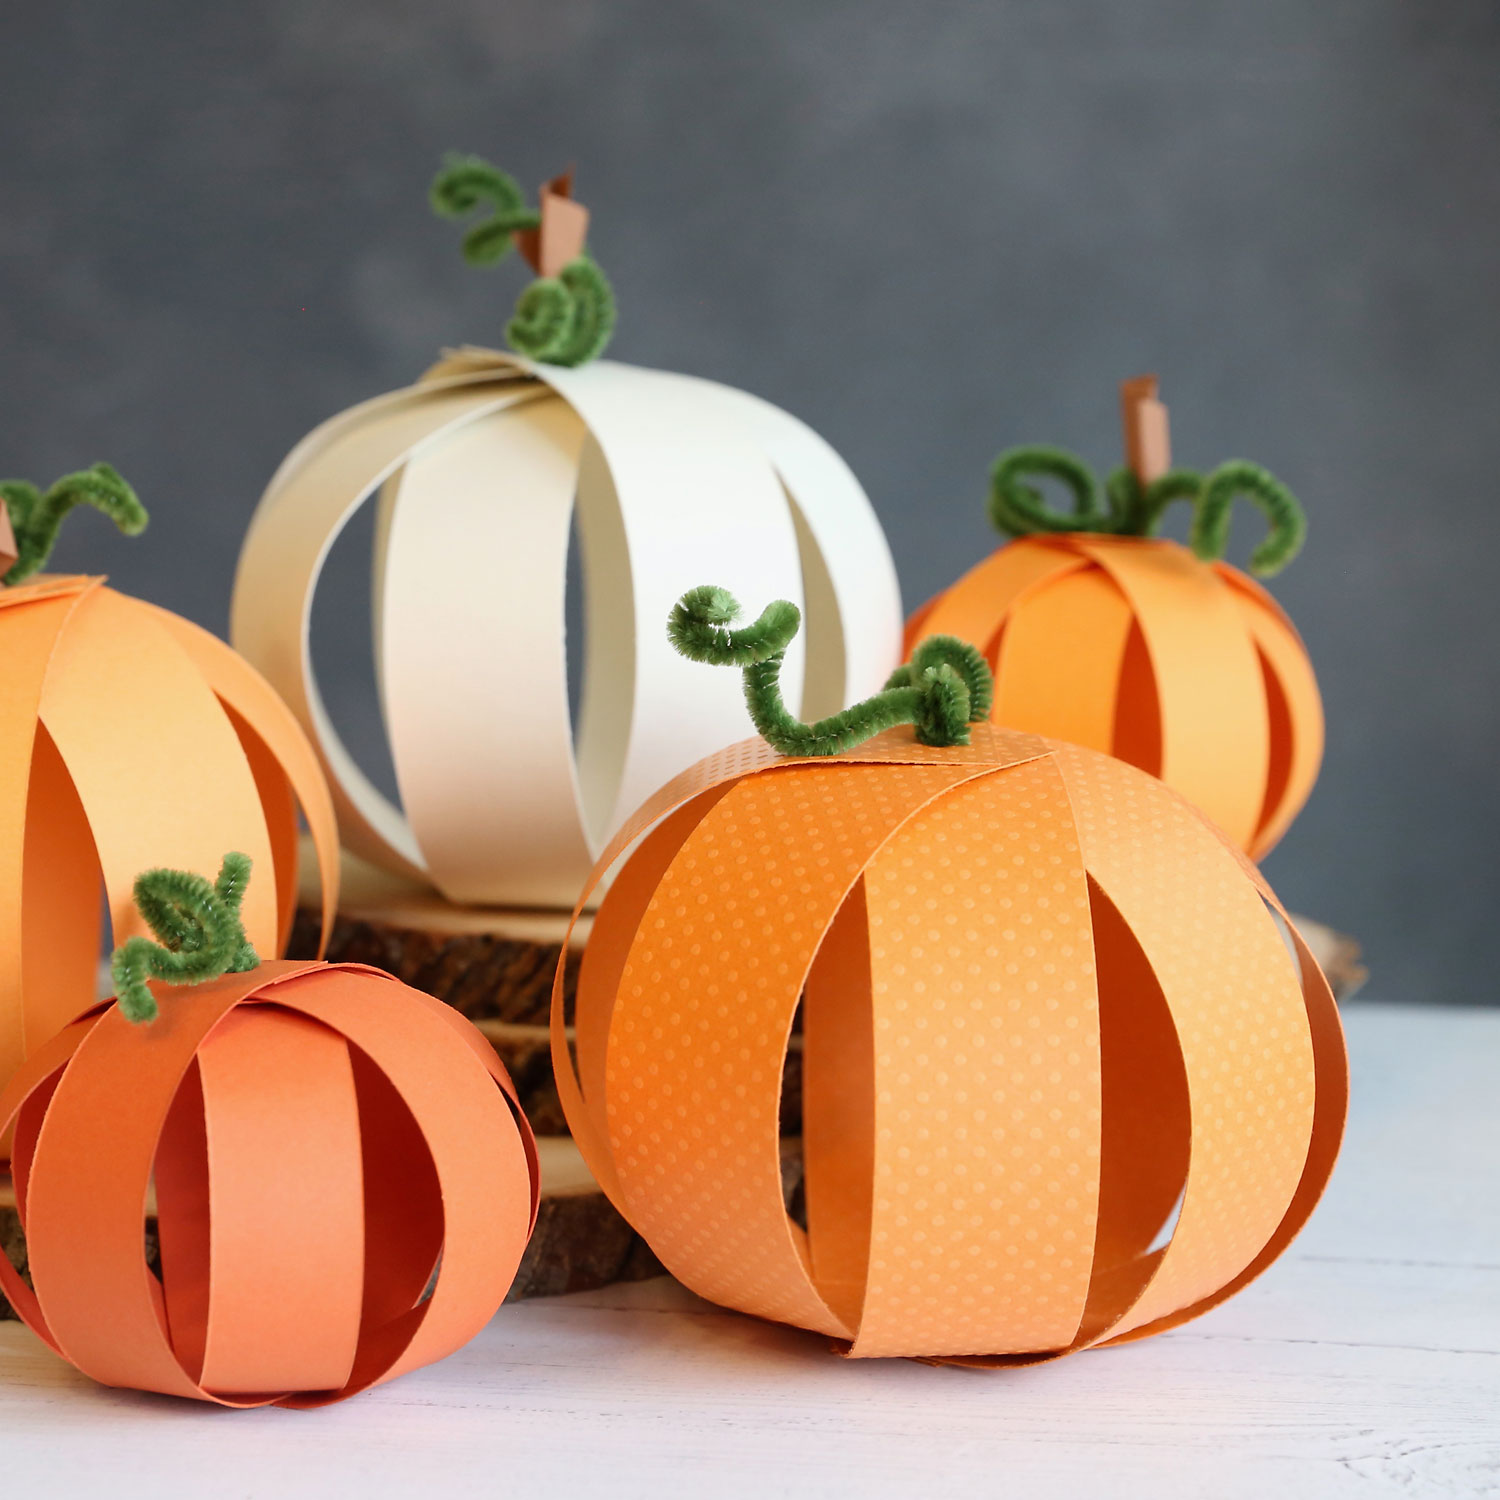 How to Make Paper Pumpkins - It's Always Autumn